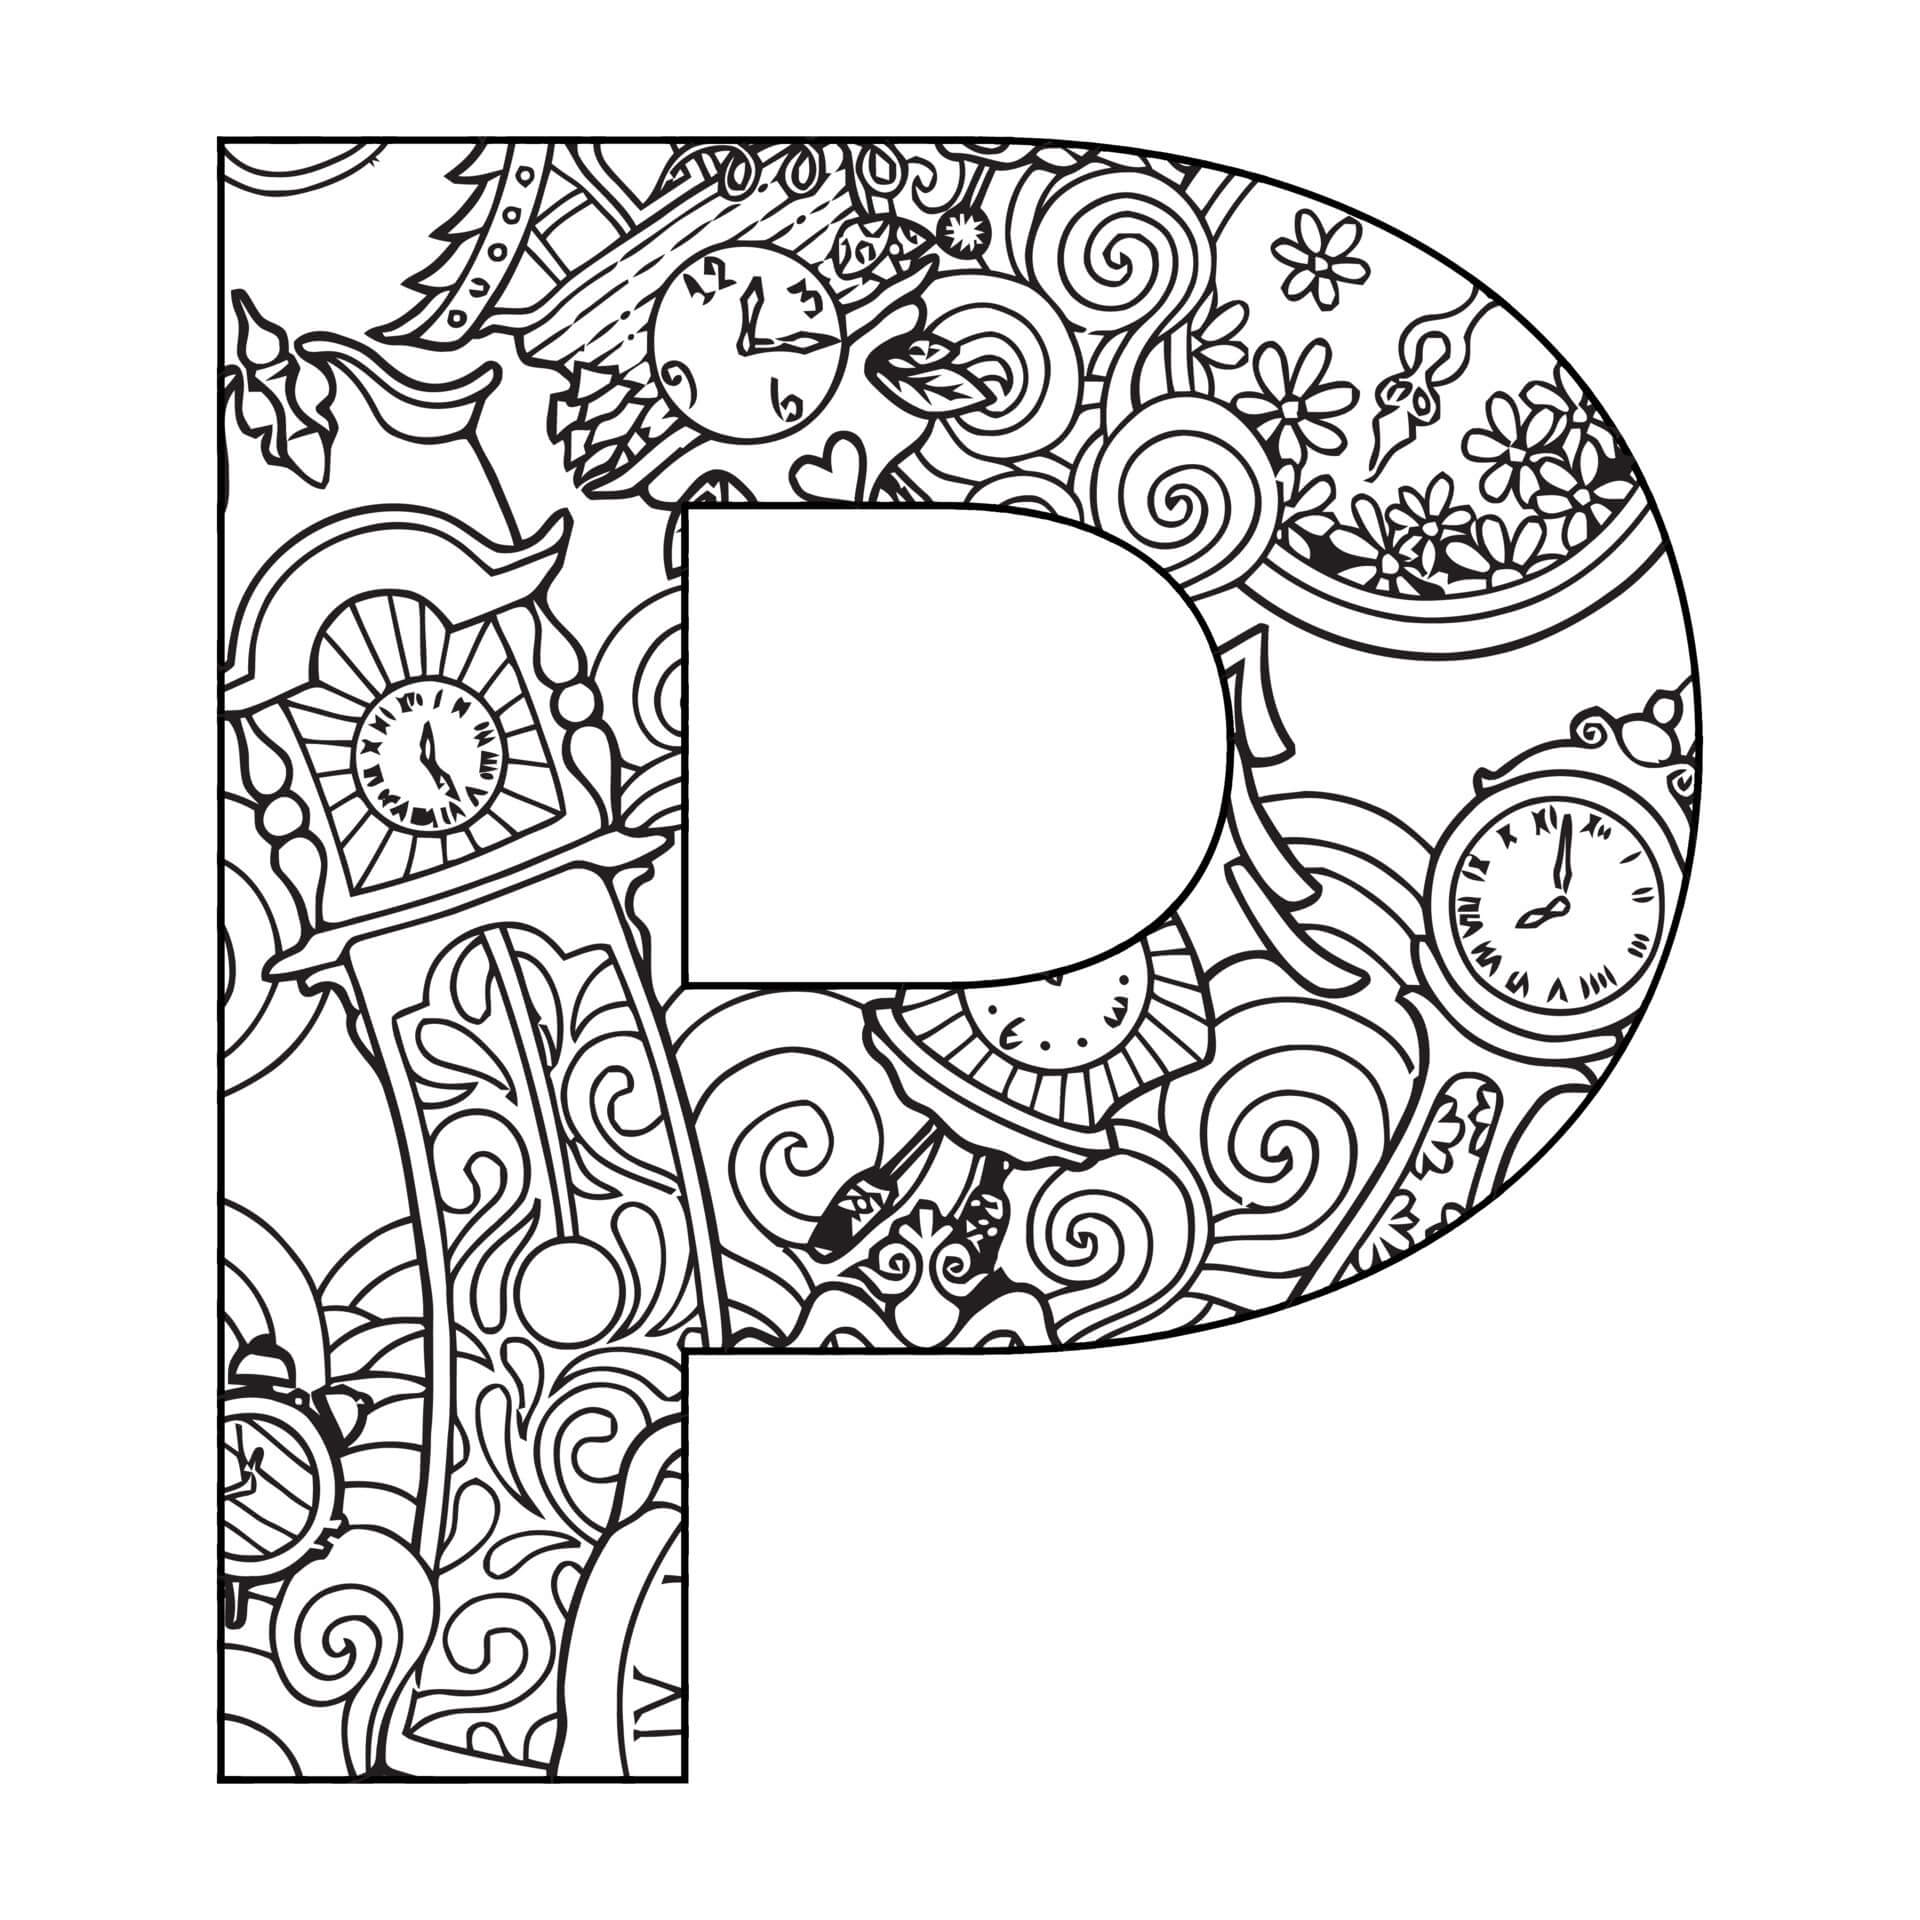 Mandala Letter P Coloring Page - Sheet 1 Mandalas